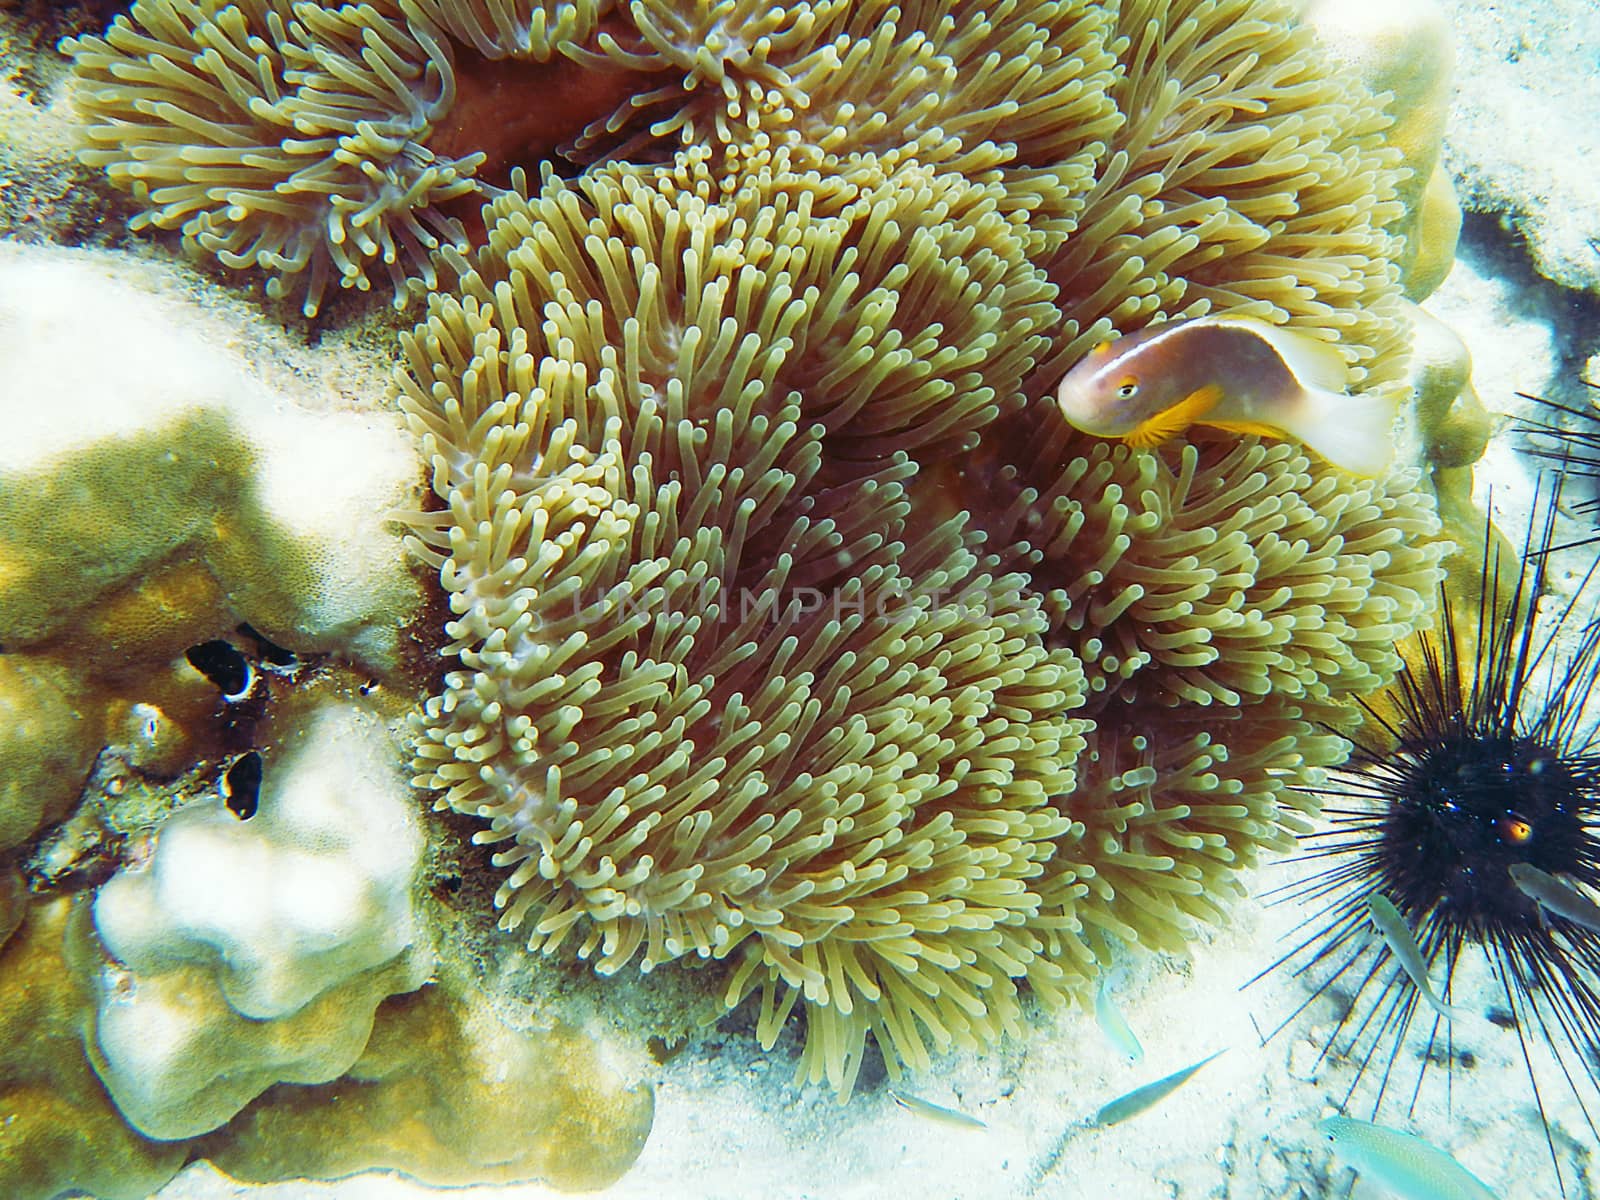 Sea Anemones Under the Sea by Puripatt